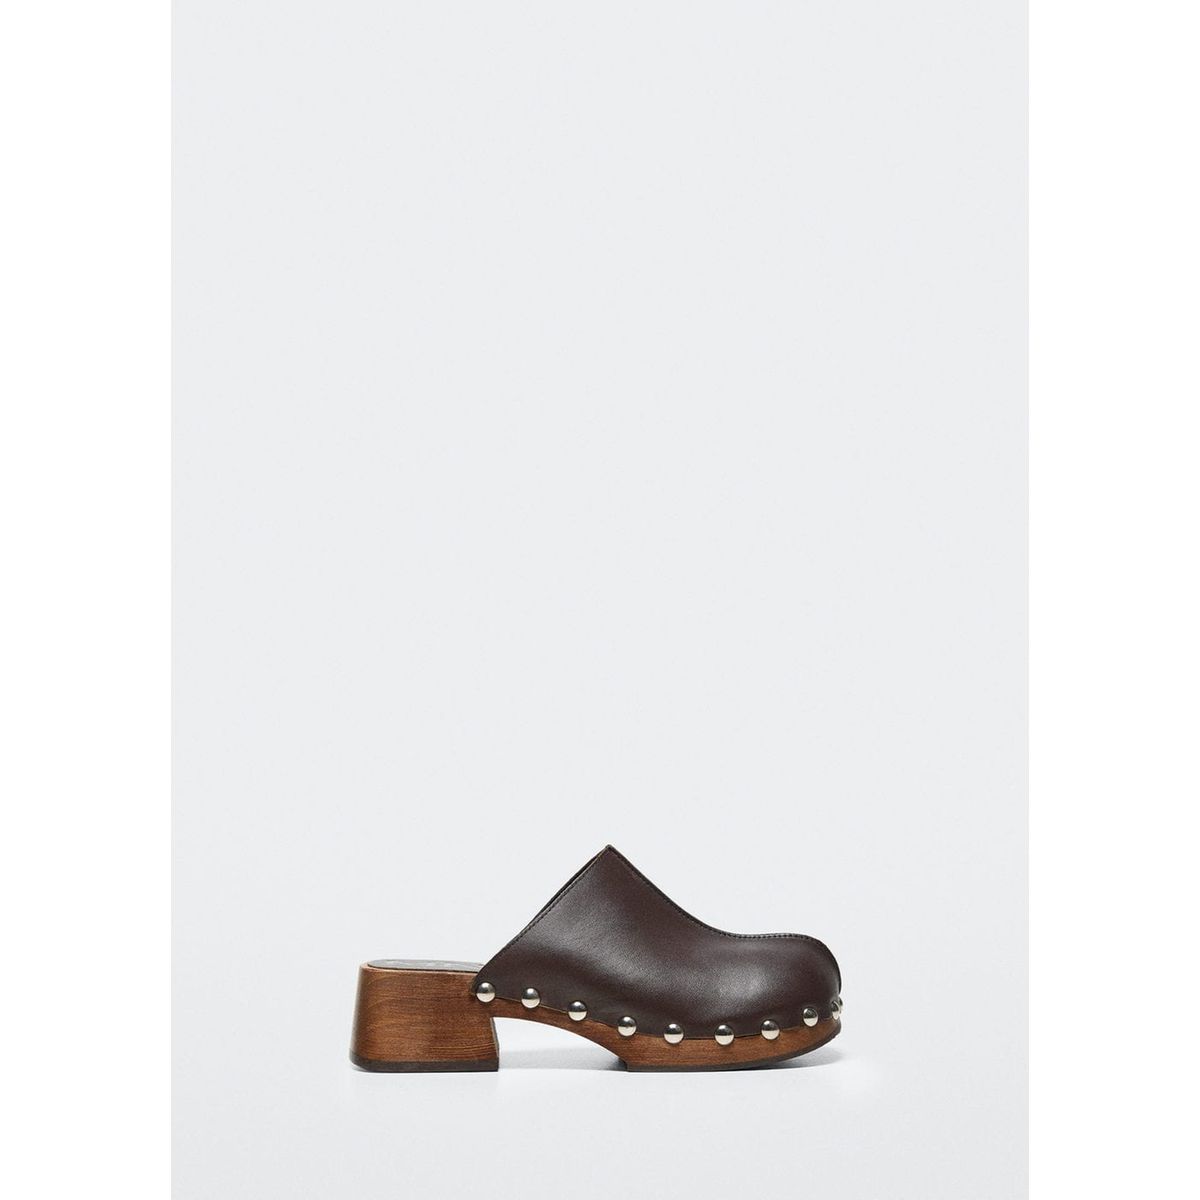 Chaussures Mules Sabots Via della spiga Milano Sabot brun-cr\u00e8me style d\u00e9contract\u00e9 